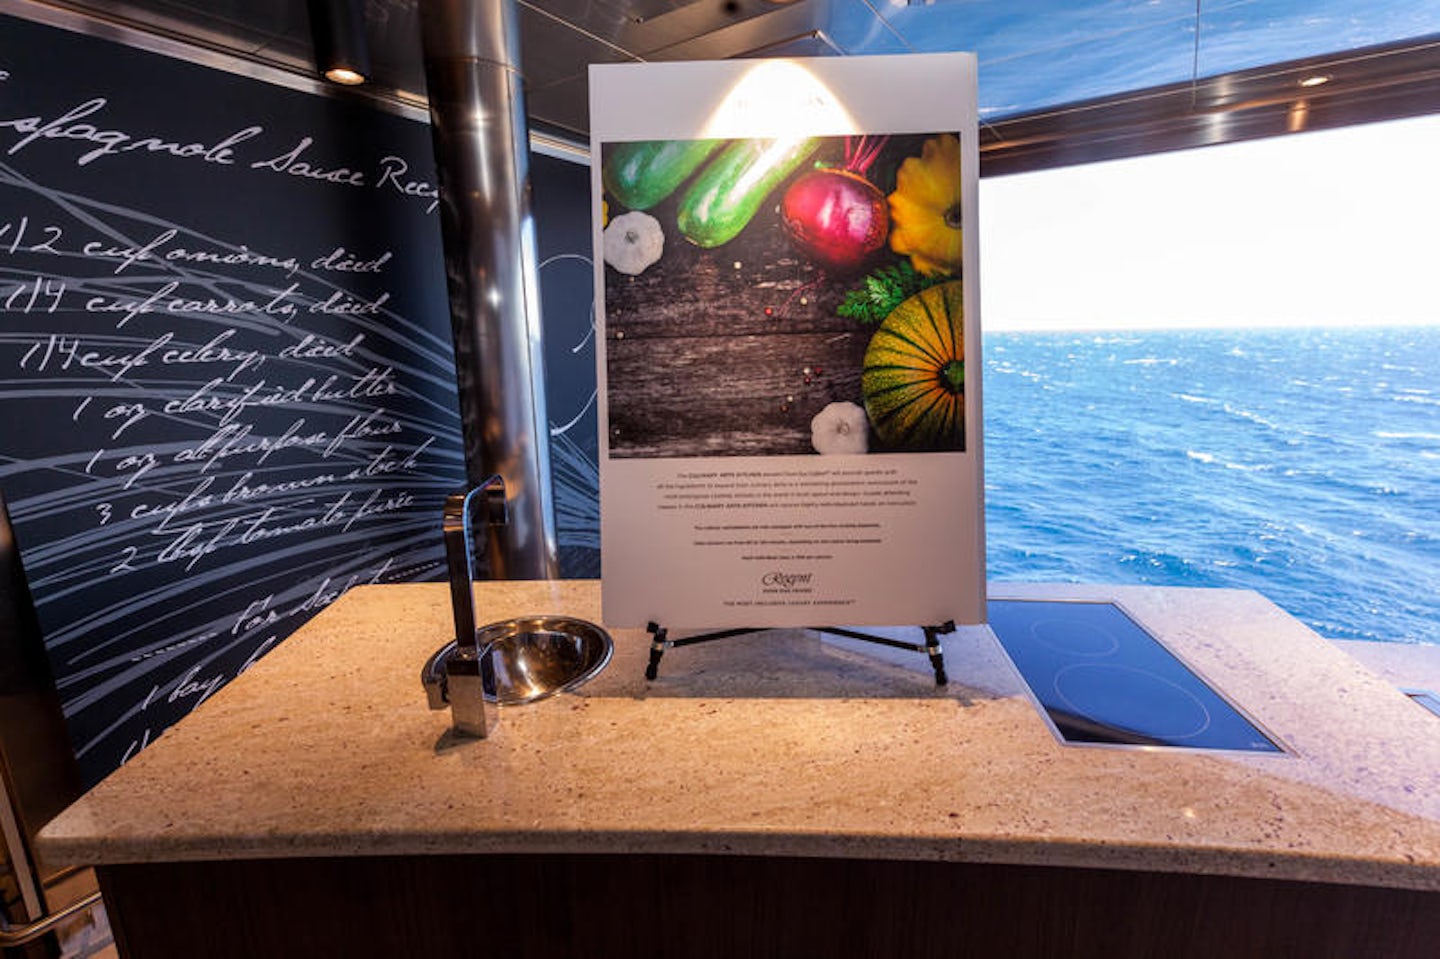 Culinary Arts Kitchen on Seven Seas Explorer